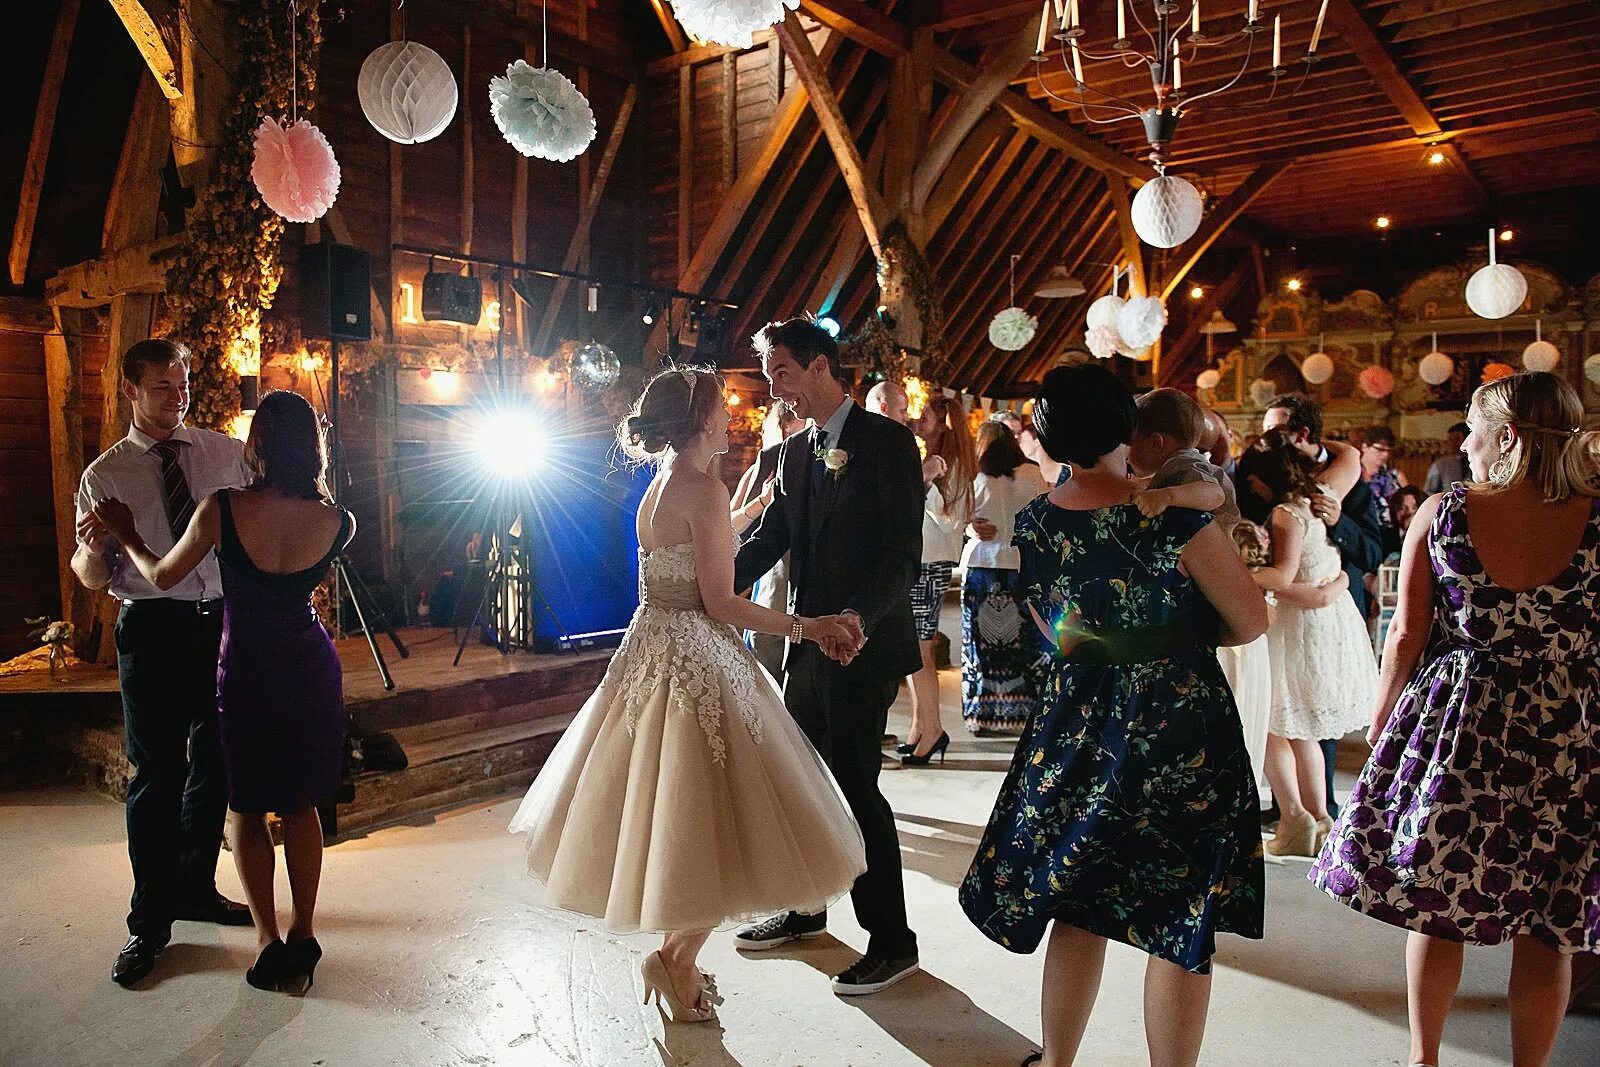 Свадьба где танцуют. Танцы на свадьбе. Свадебные танцы гостей. Танцы в ресторане. Гости танцуют на свадьбе.